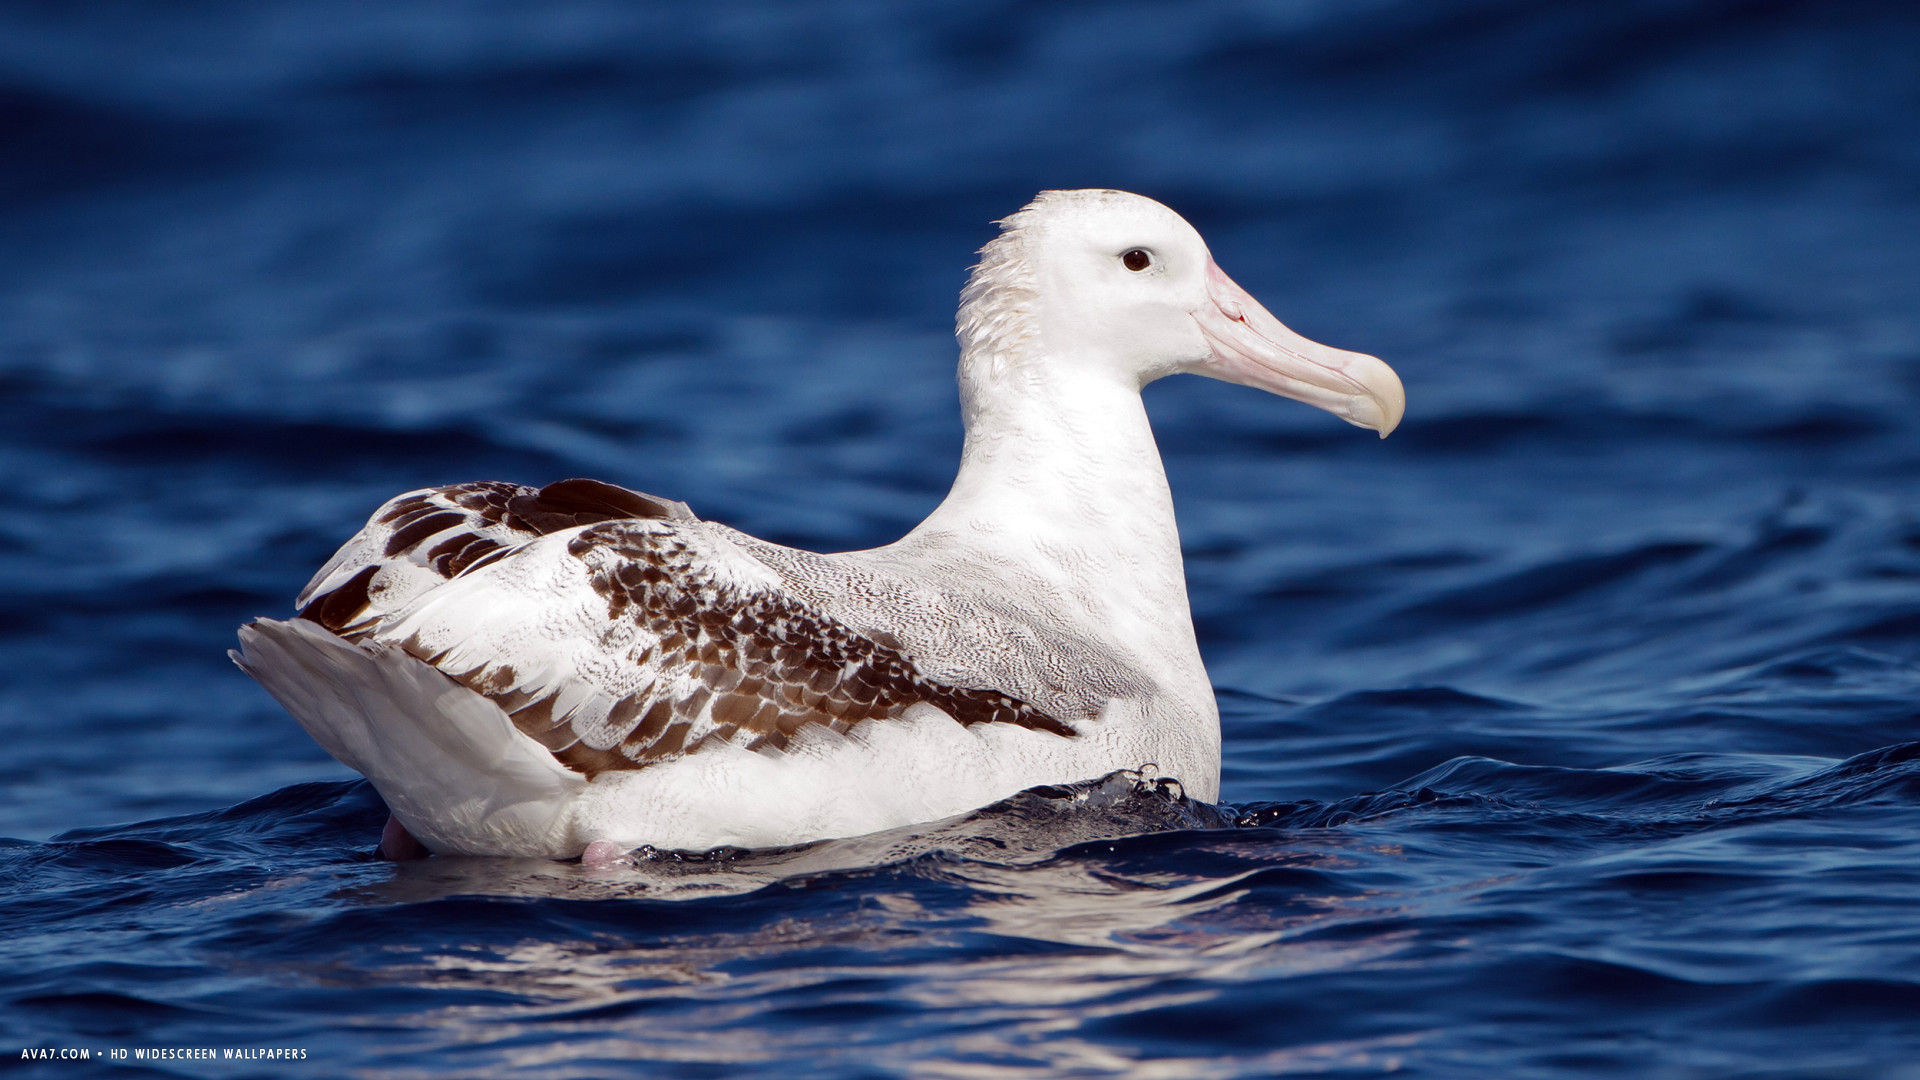 Wandering albatross, Grace in movement, Ethereal bird, Pristine white plumage, 1920x1080 Full HD Desktop